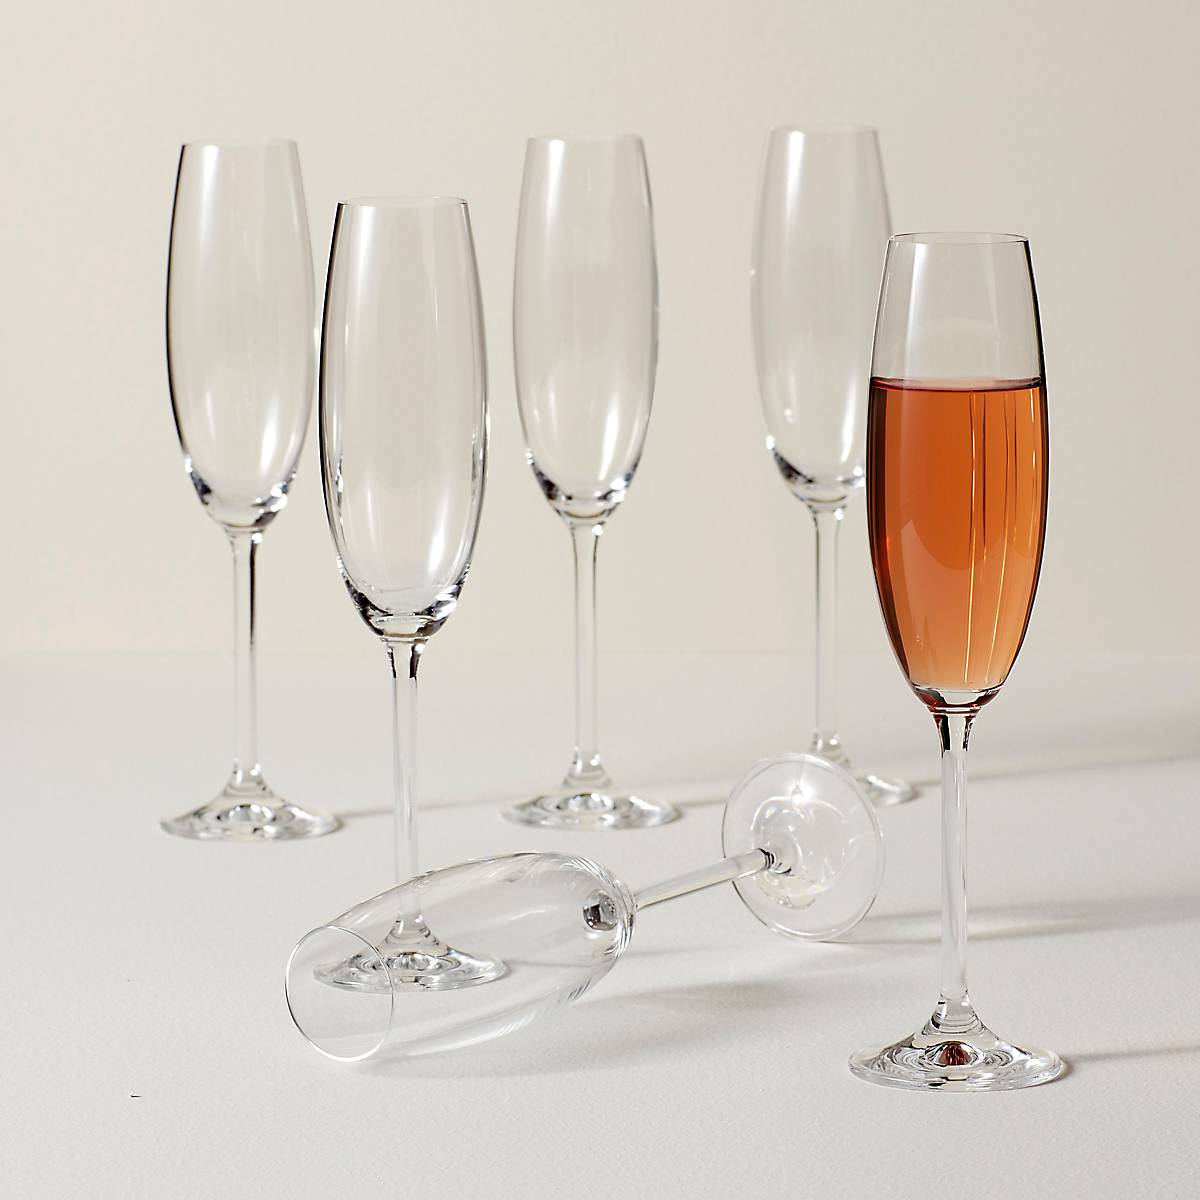 Tuscany Classics Champagne Flute Set, Buy 4 Get 6 – Lenox Corporation